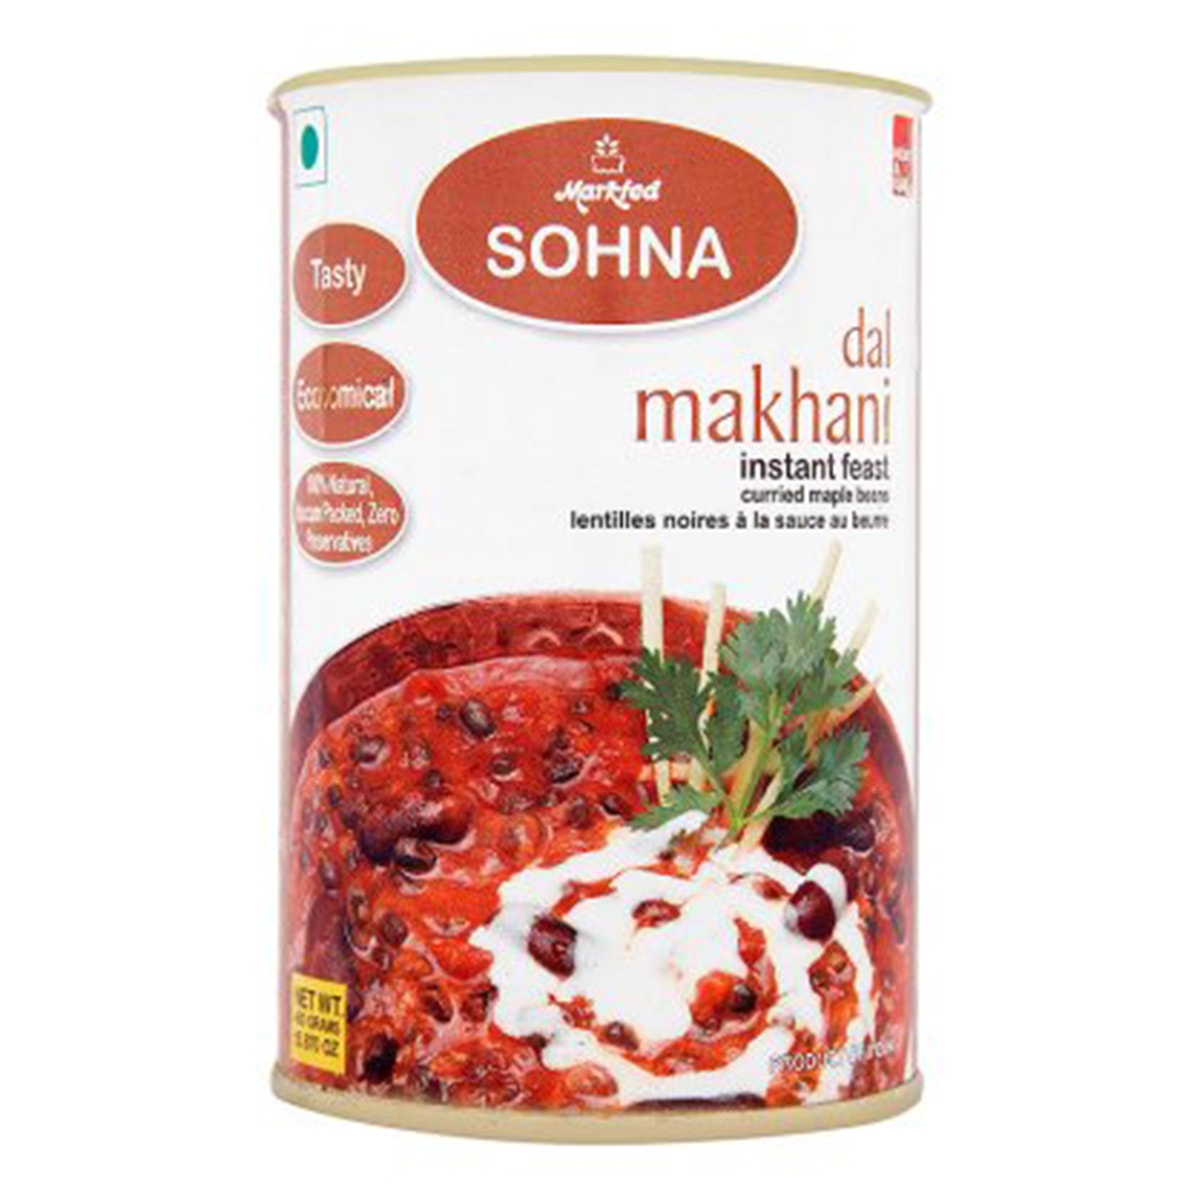 Buy Markfed Sohna Dal Makhani (Curried Maple Beans) - 450 gm